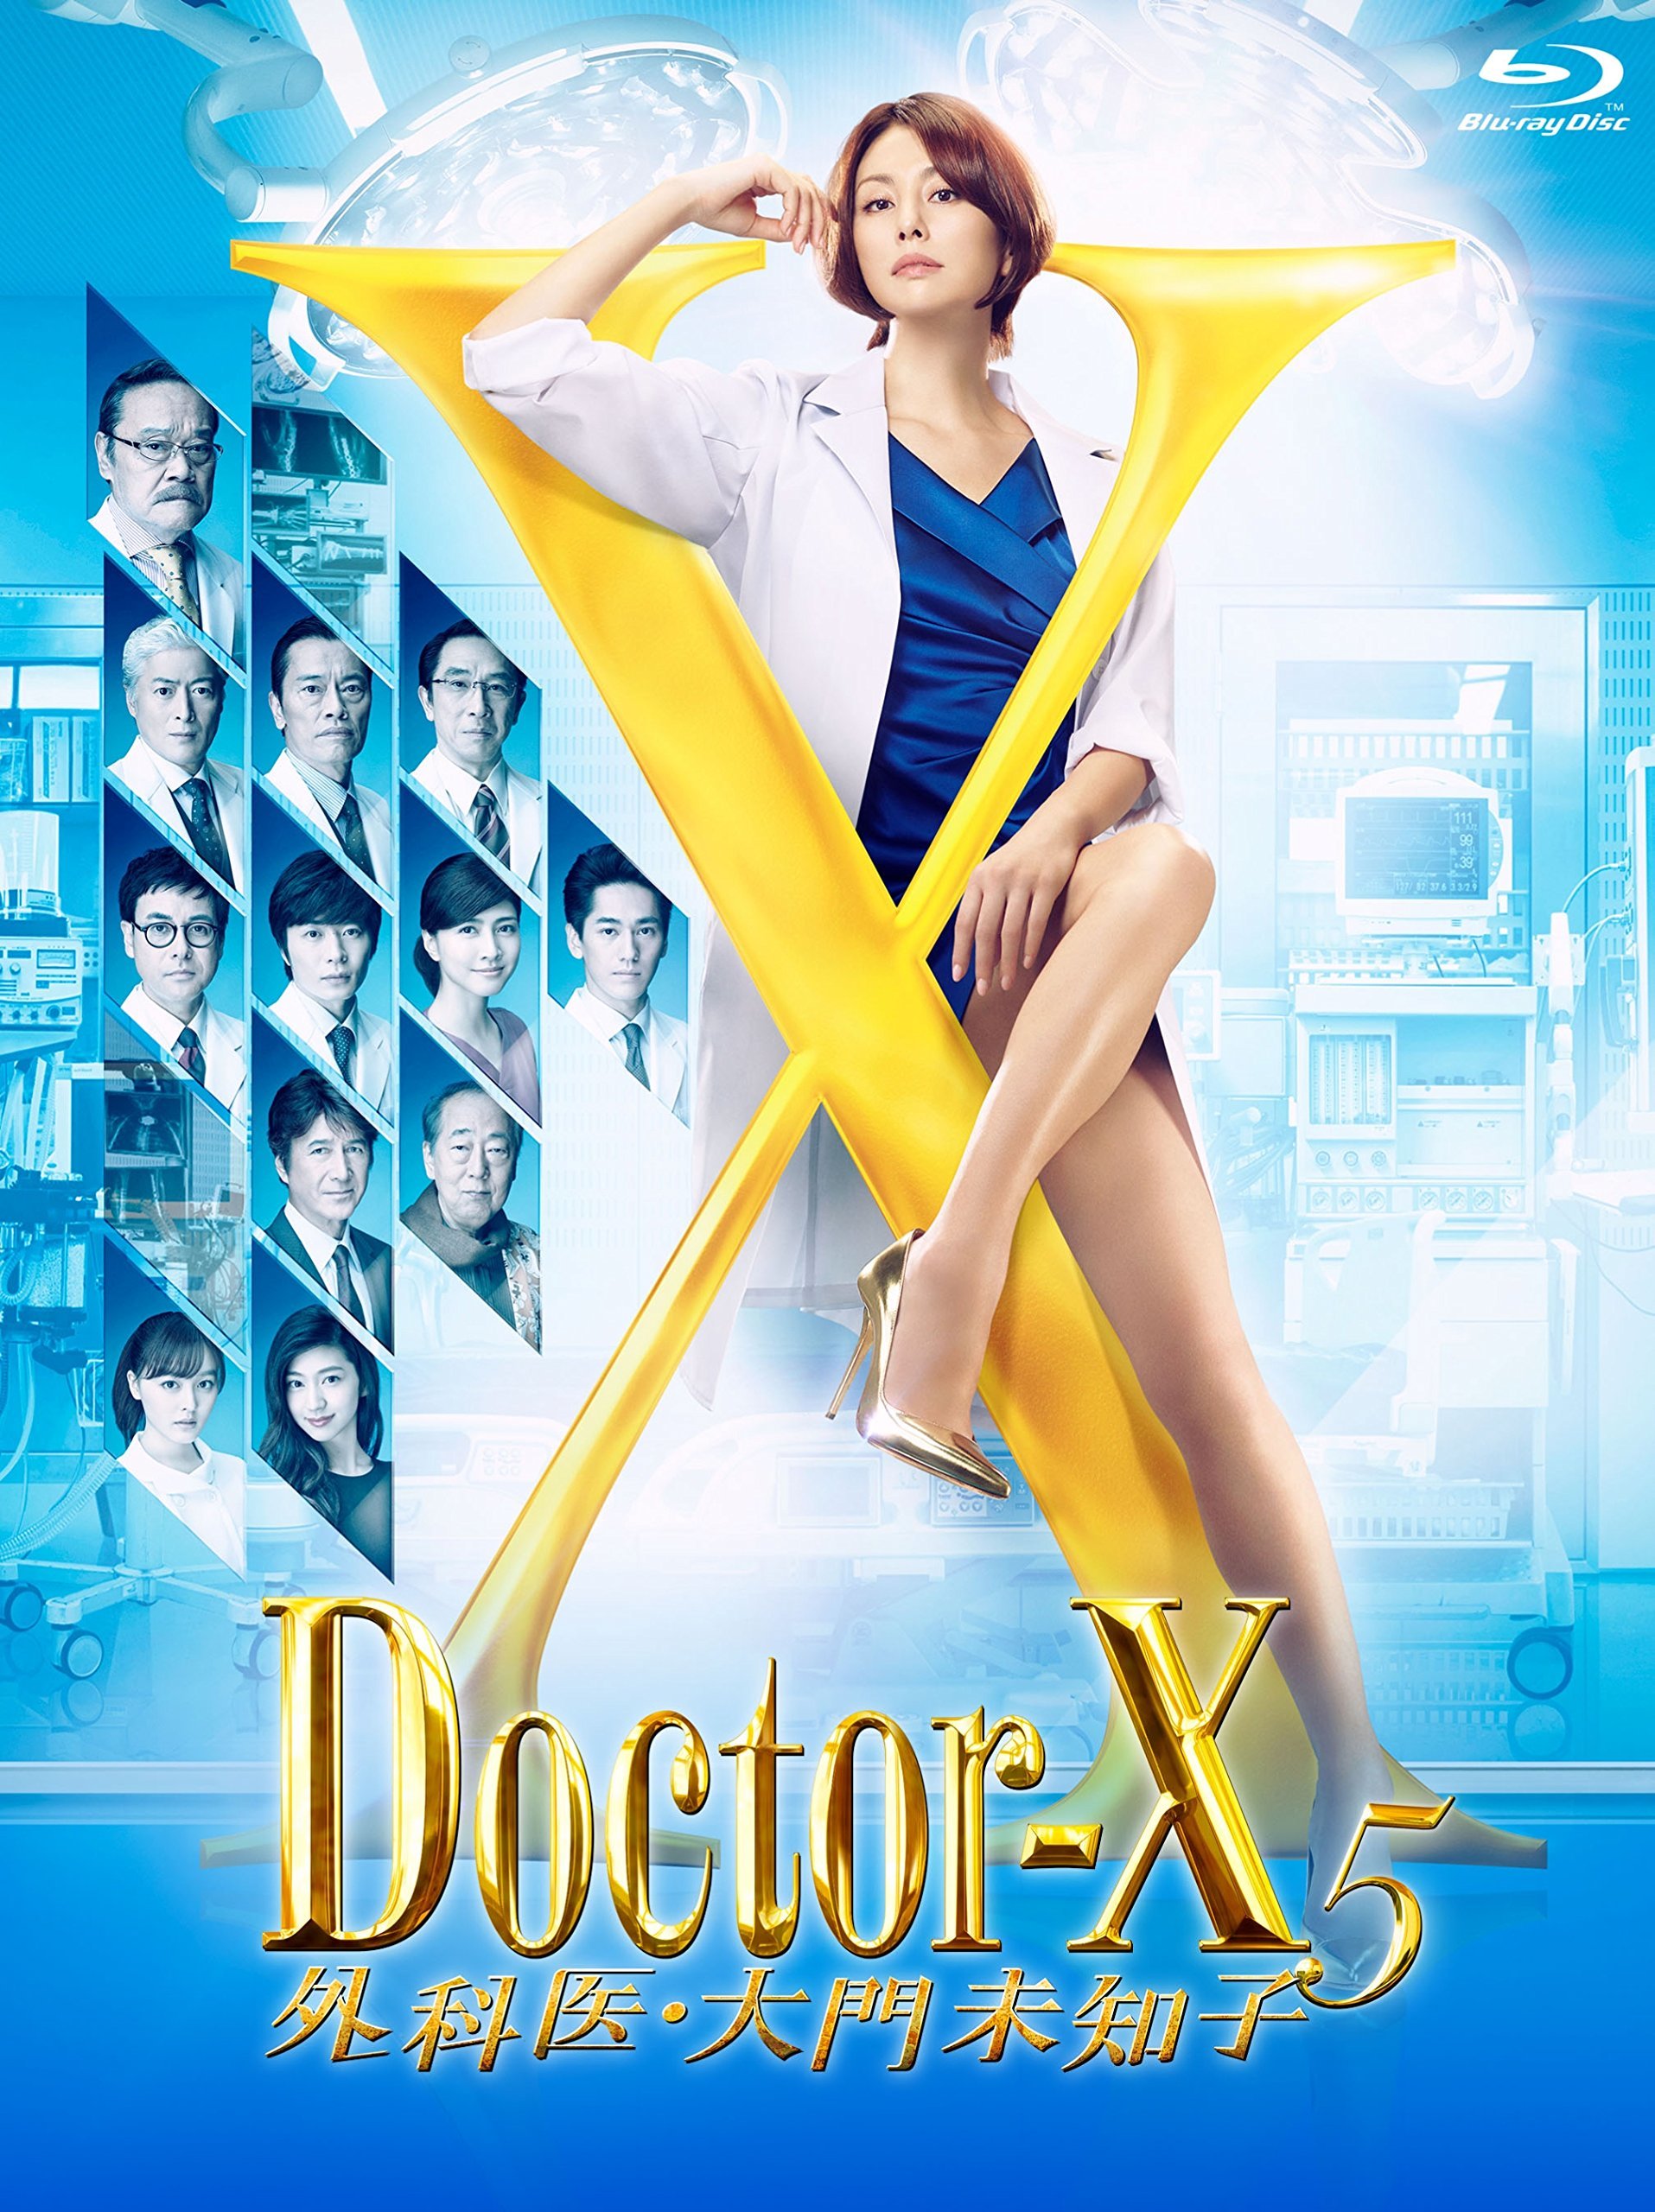 Doctor X - Gekai Daimon Michiko: Season Five Blu-ray (ドクターX